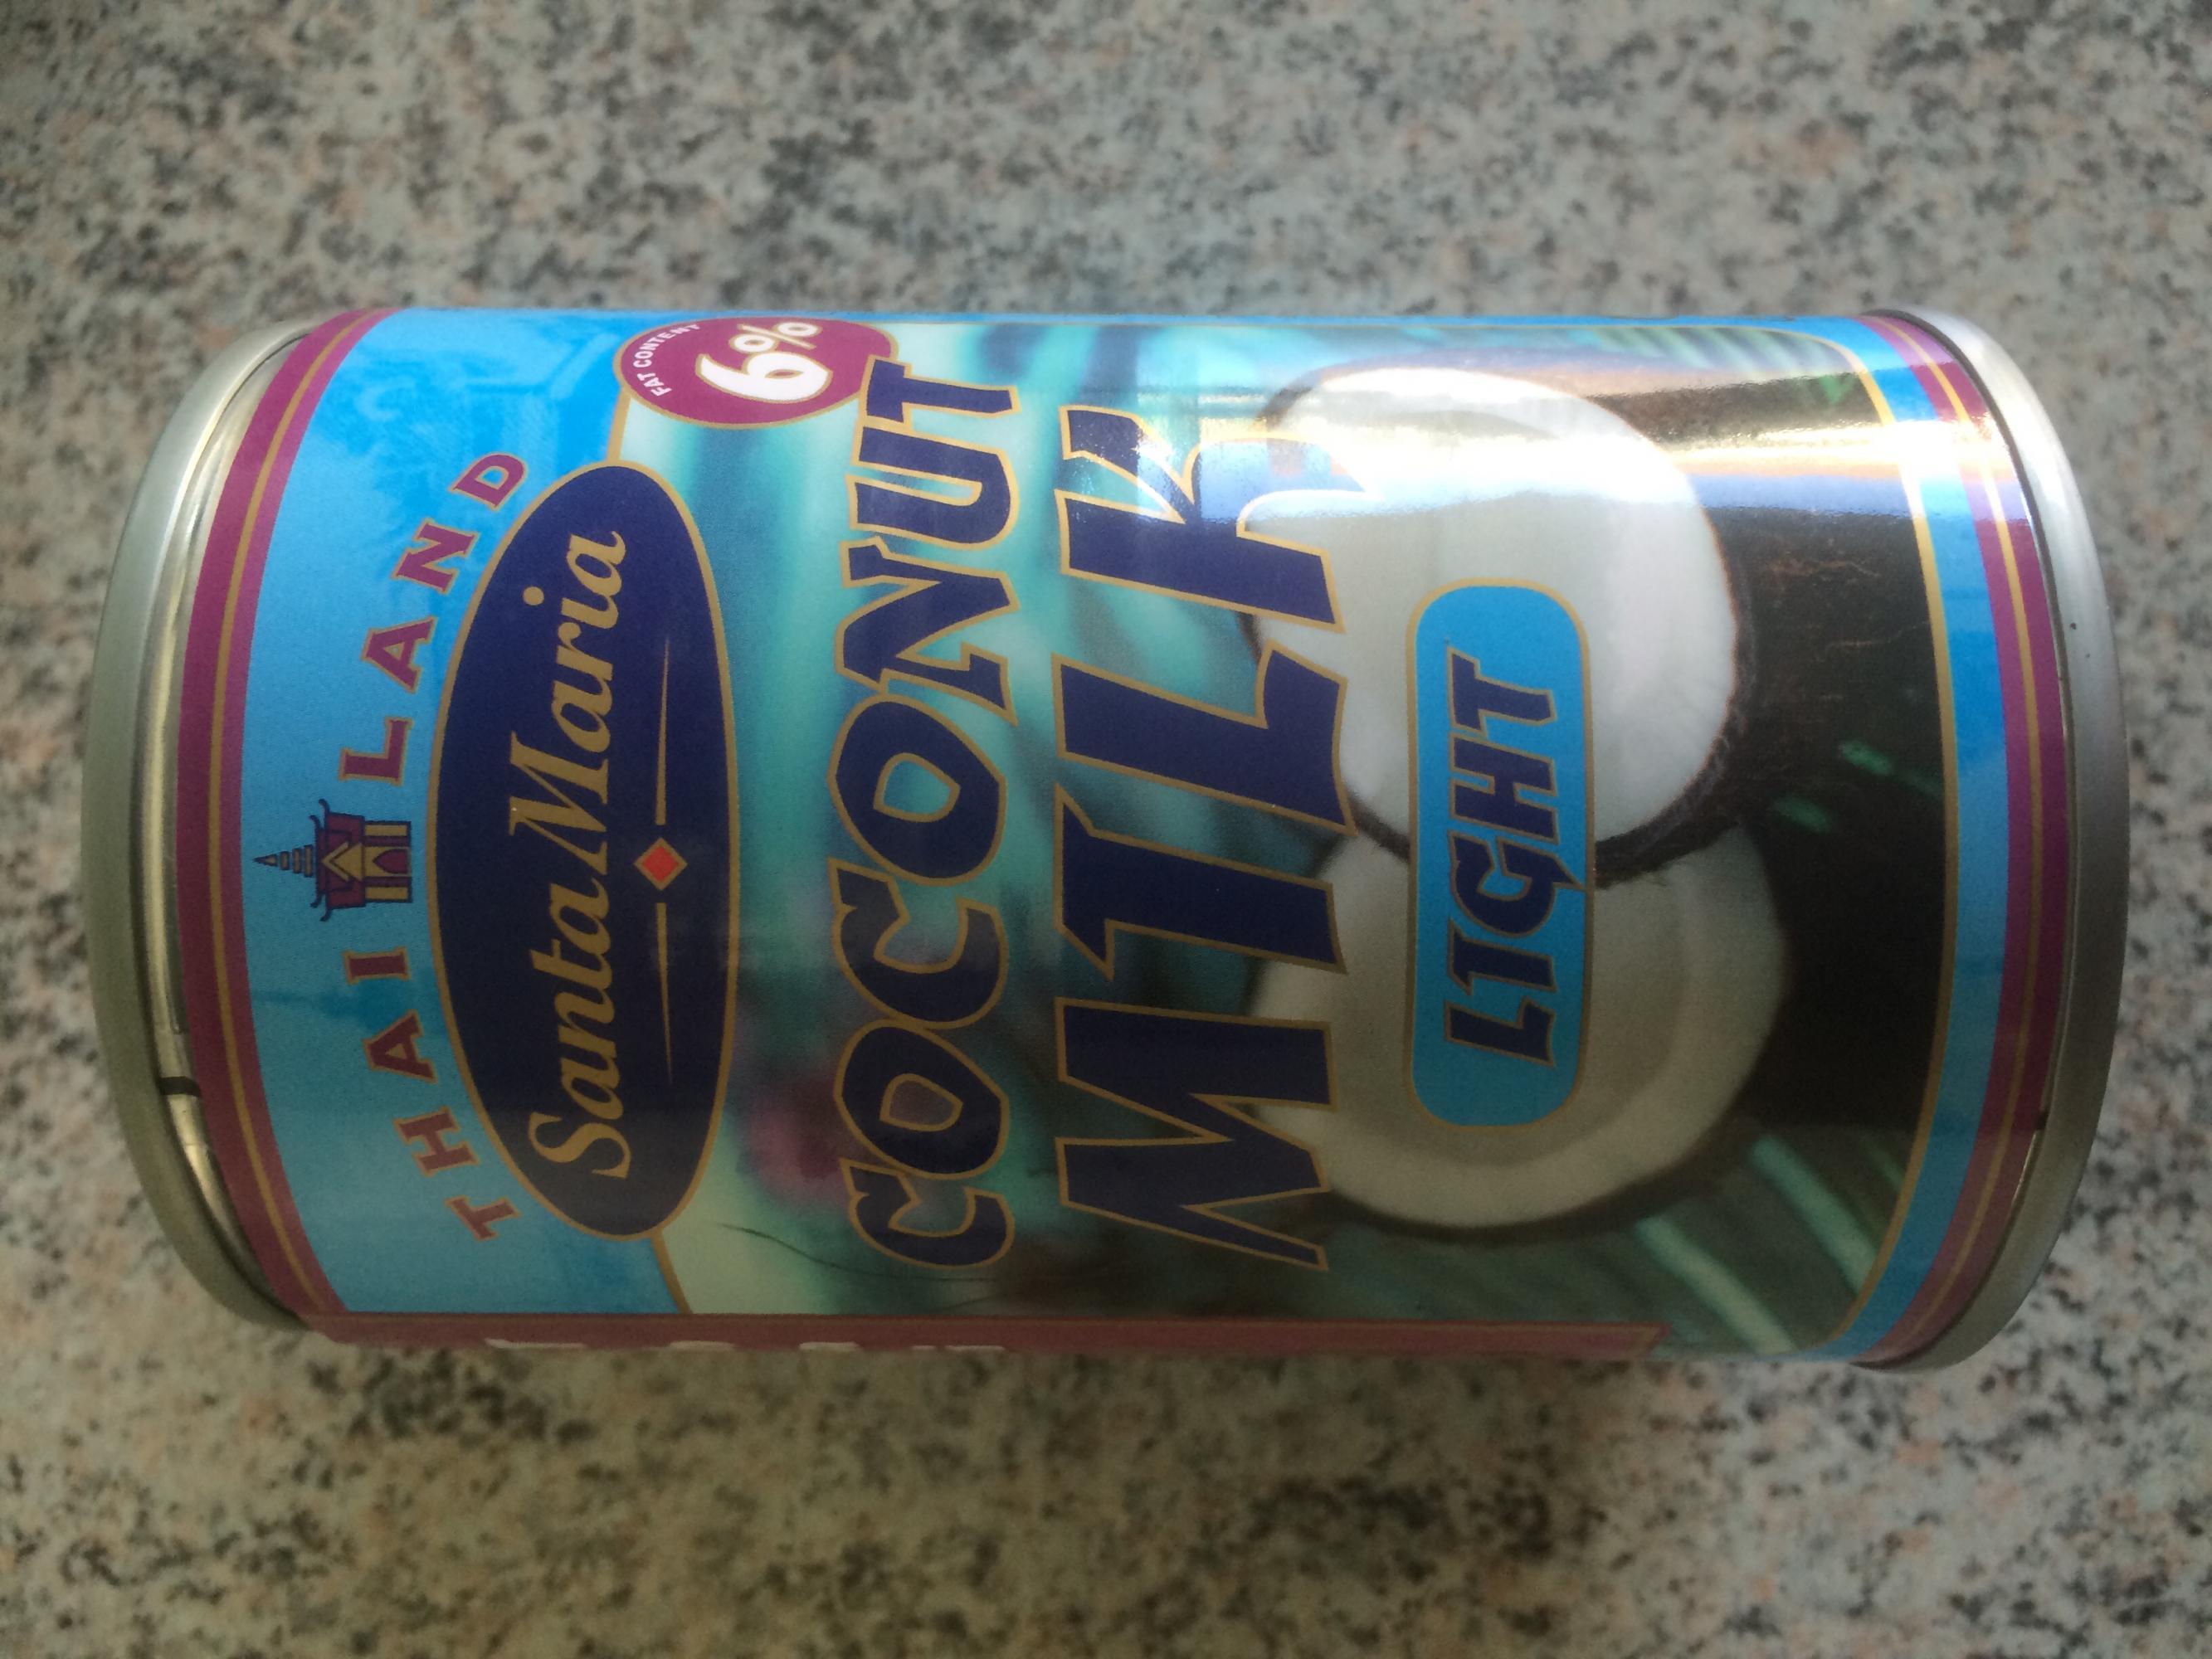 Kokosmælk light 6% (Santa Maria Coconut milk) Ukategoriseret - Fødevarer - Vægttab.nu